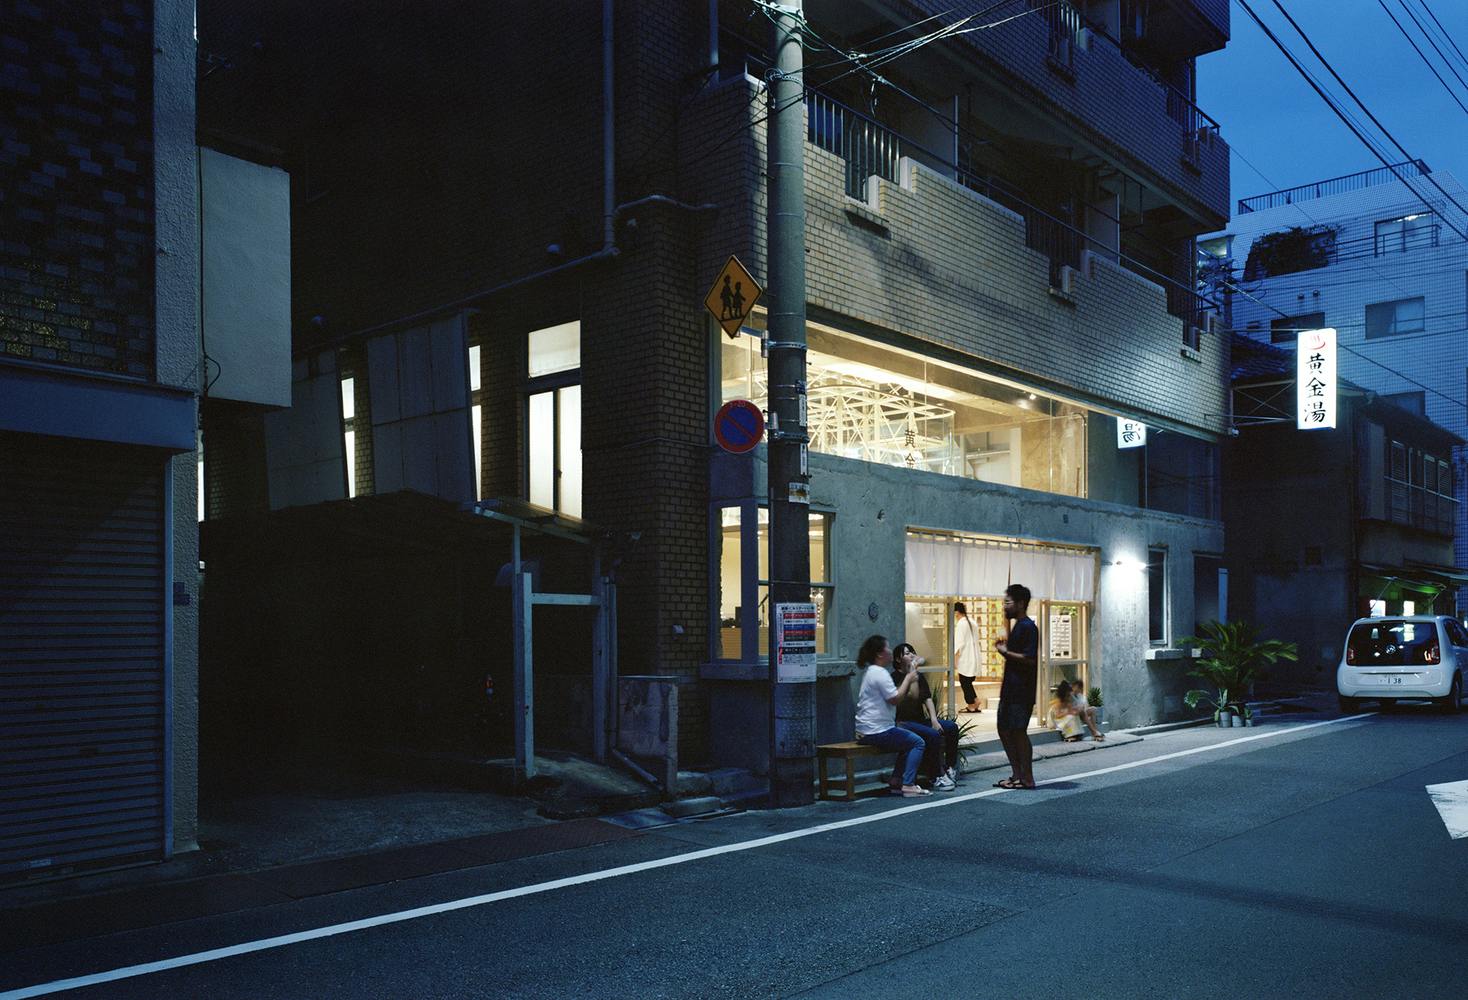 Koganeyu Sento in Sumida, Tokyo by night | Photo by Yurika Kono